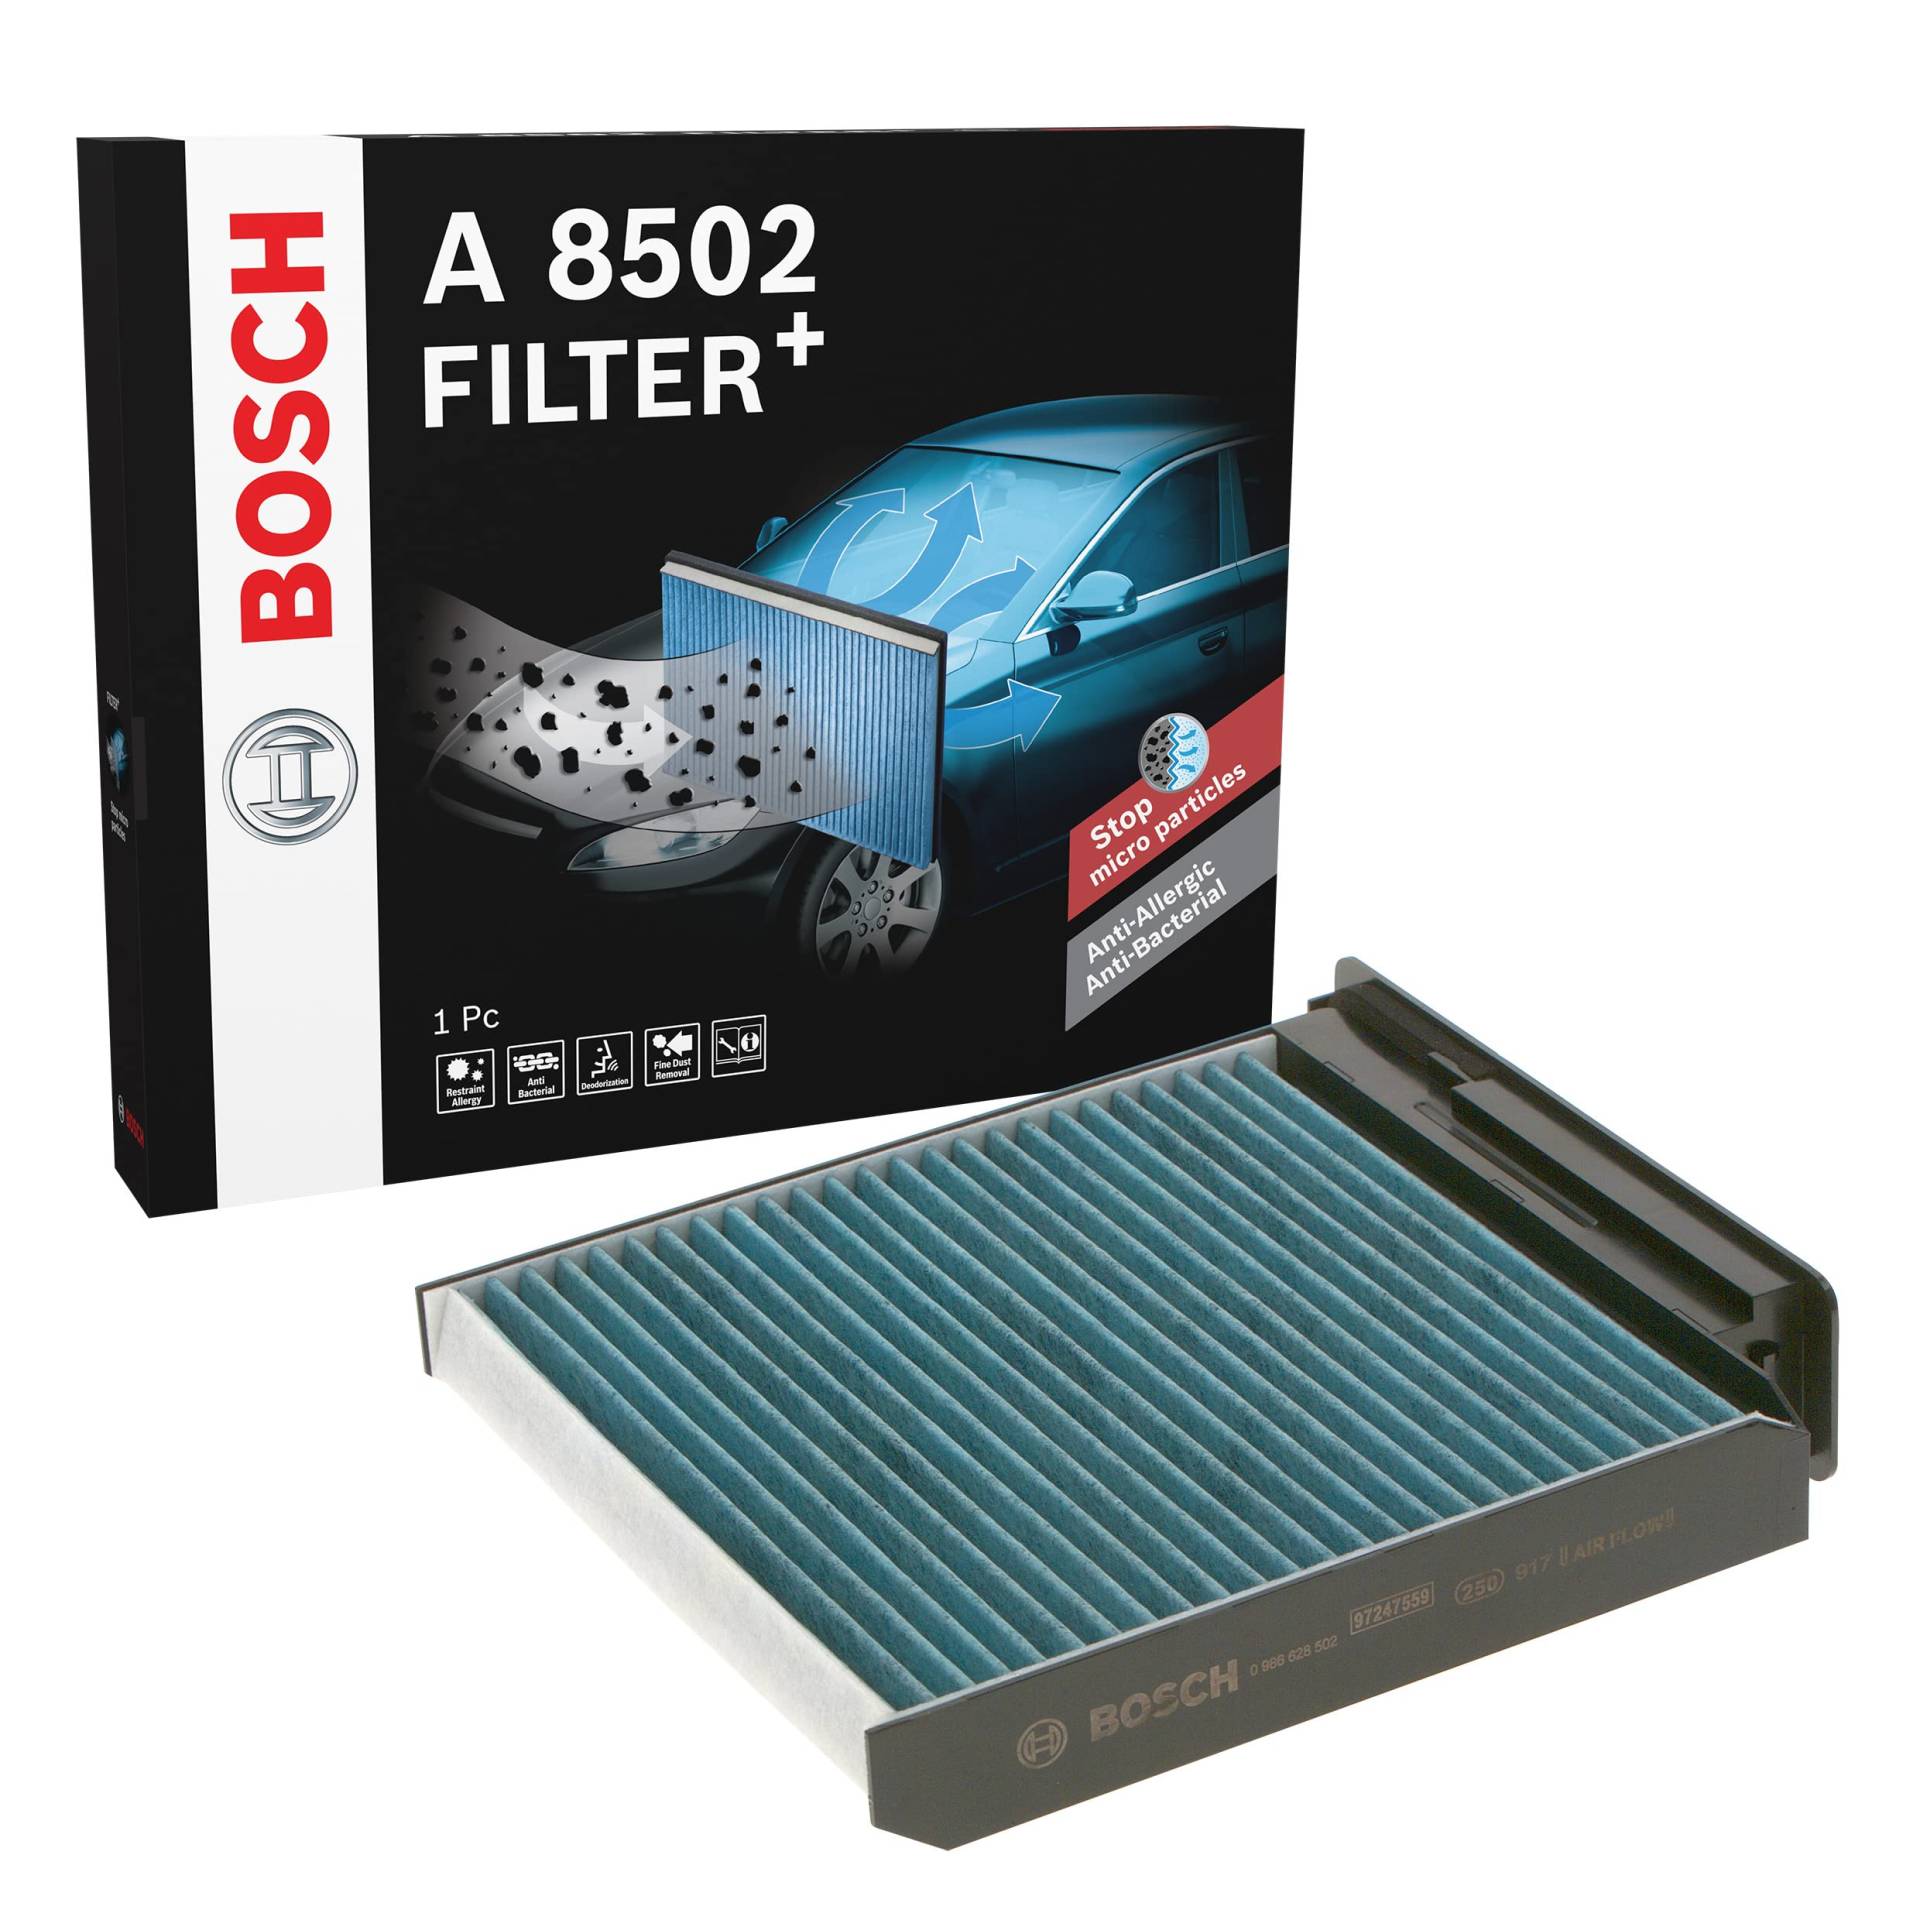 Bosch A8502 - Innenraumfilter Filter+ von Bosch Automotive